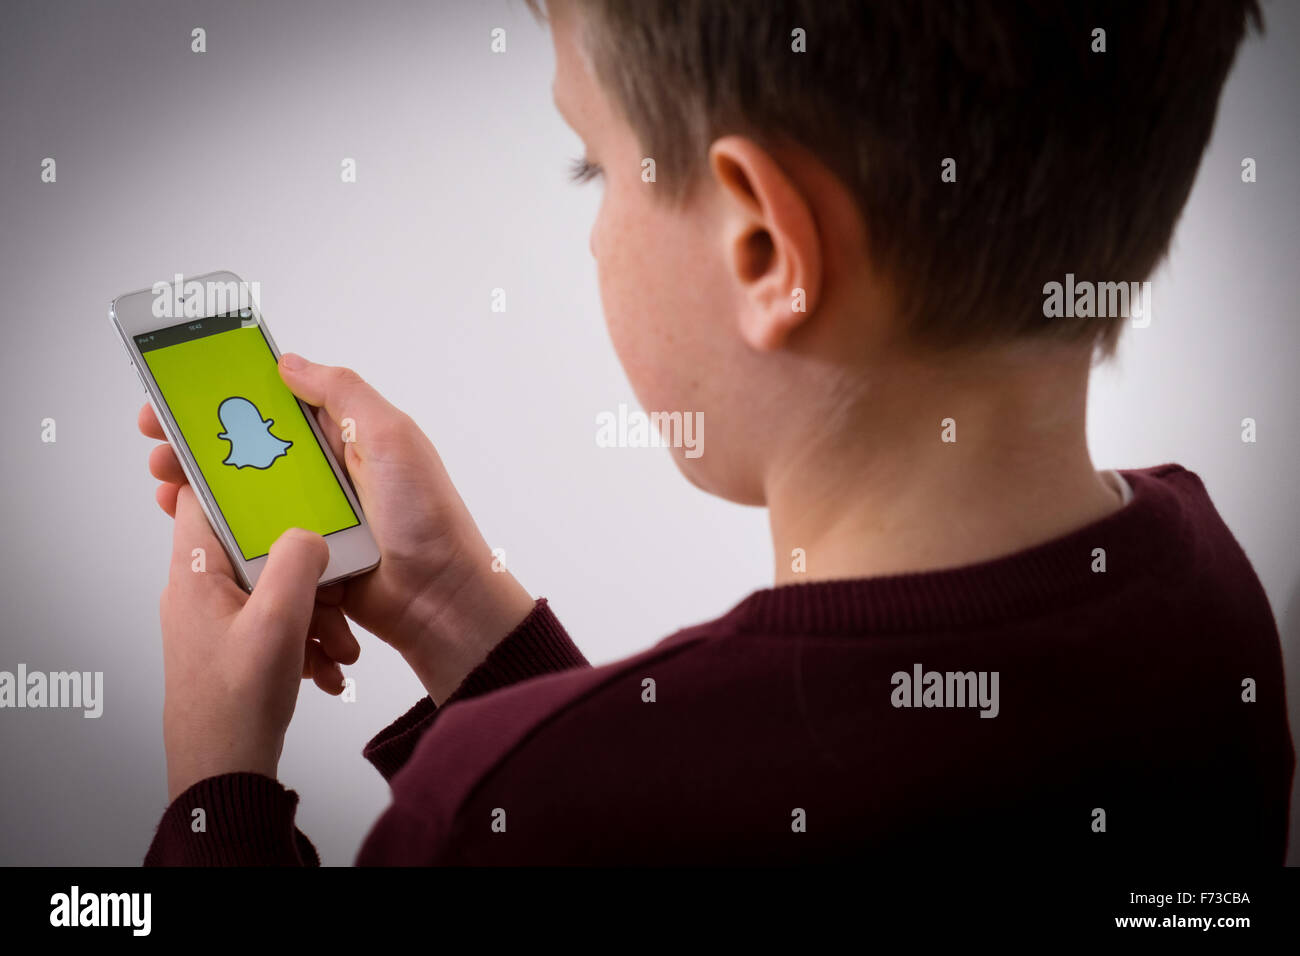 A boy using the app Snapchat Stock Photo